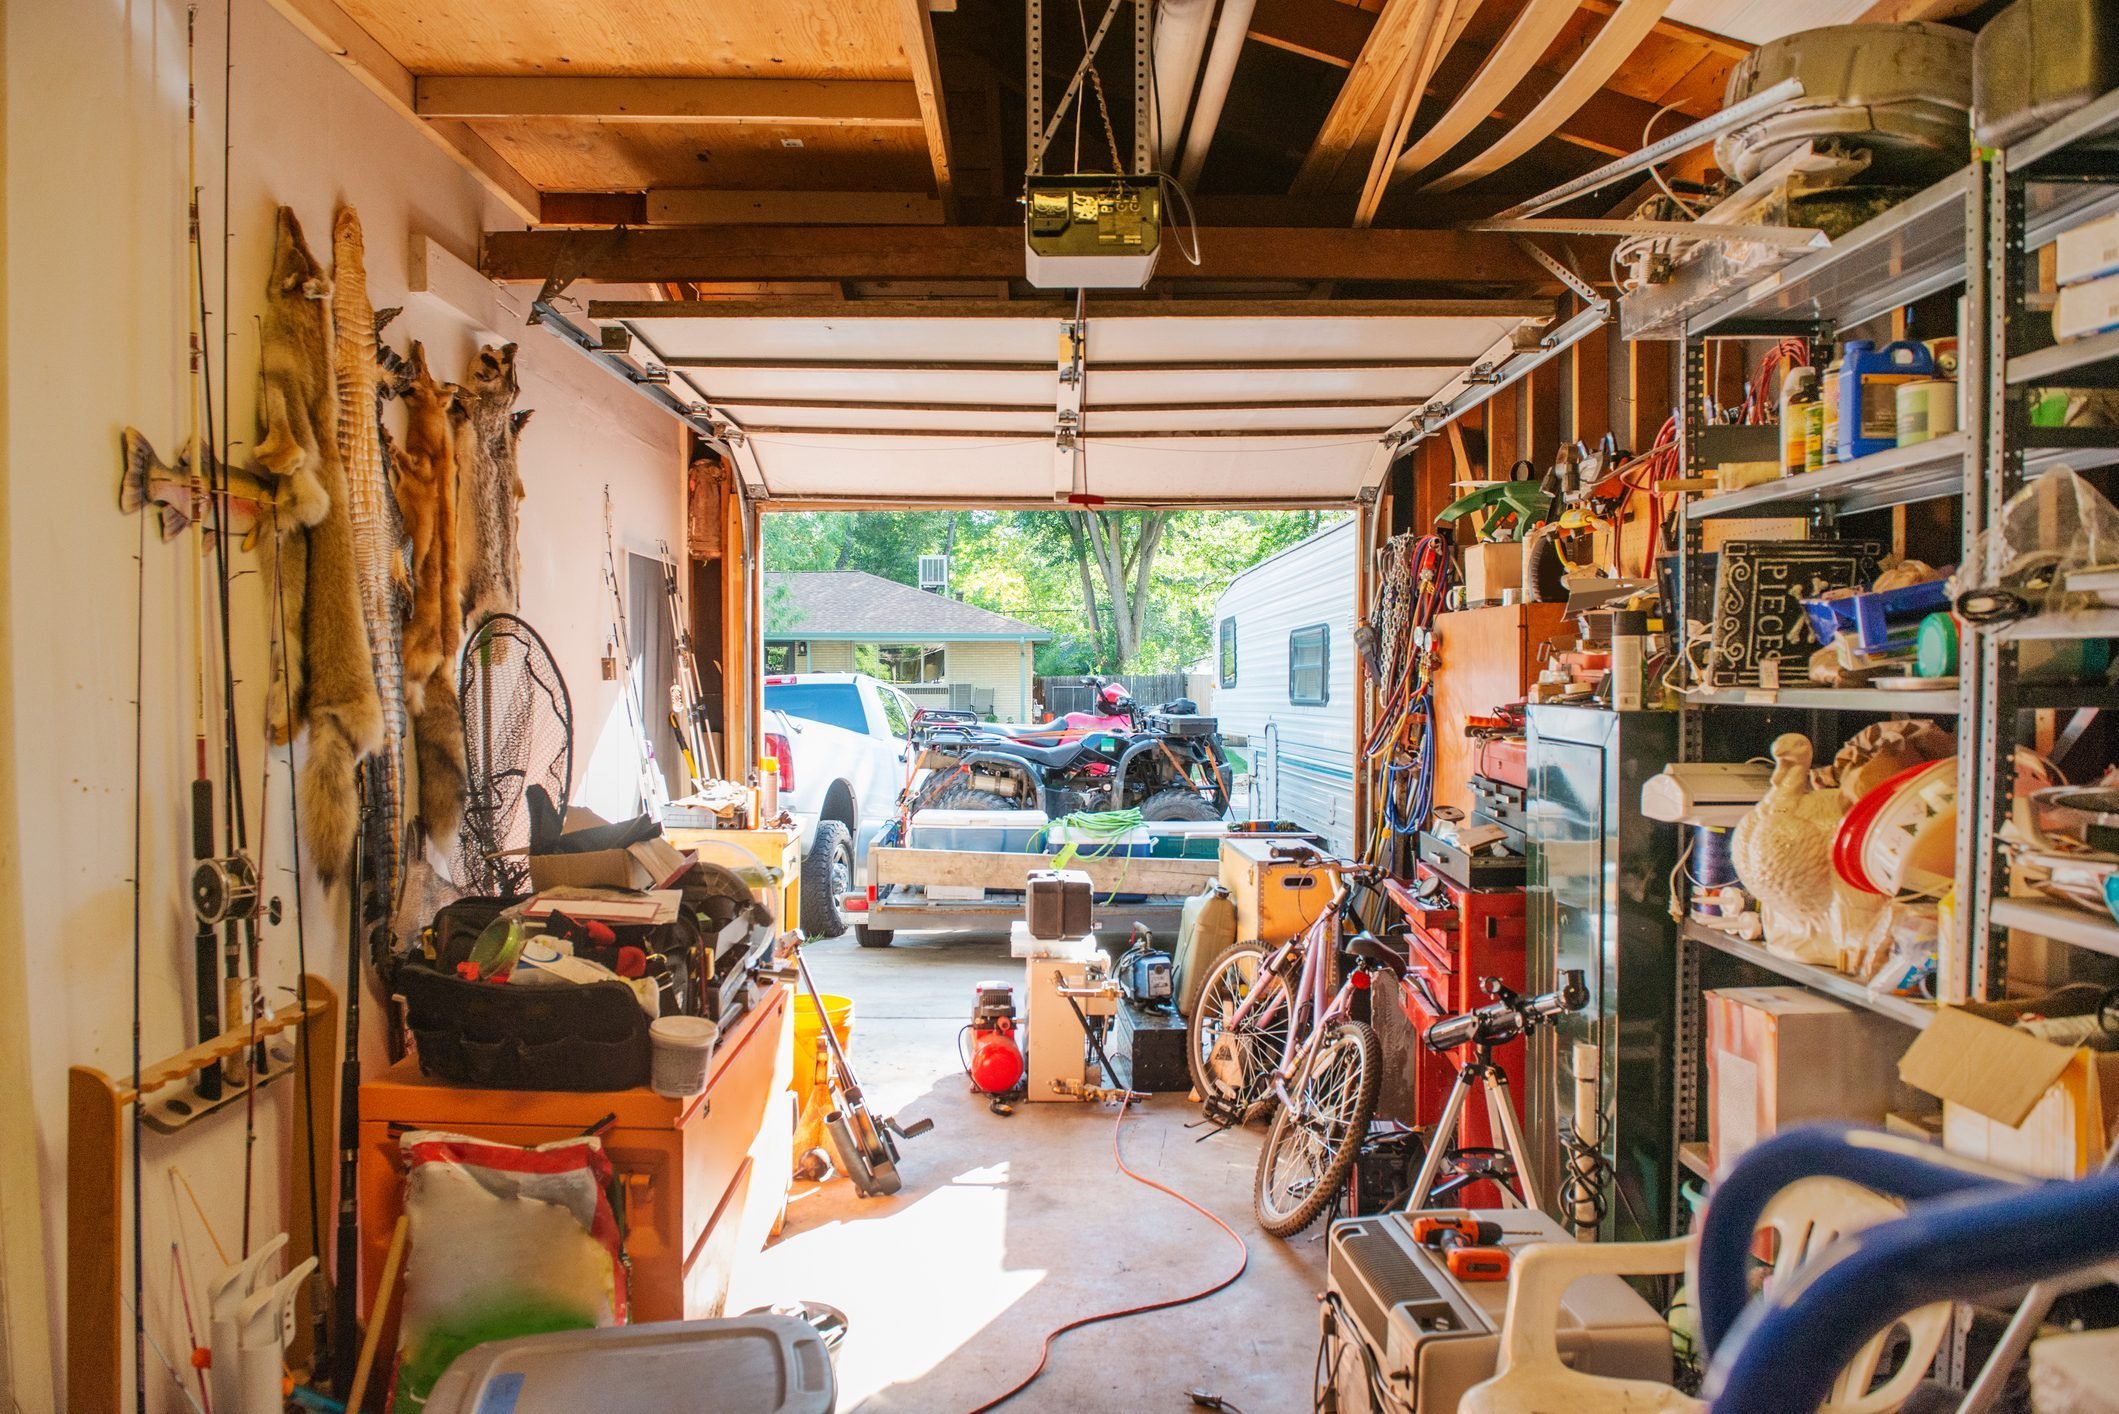 Garage Storage: How To Make Space-Saving Sliding Shelves - Home